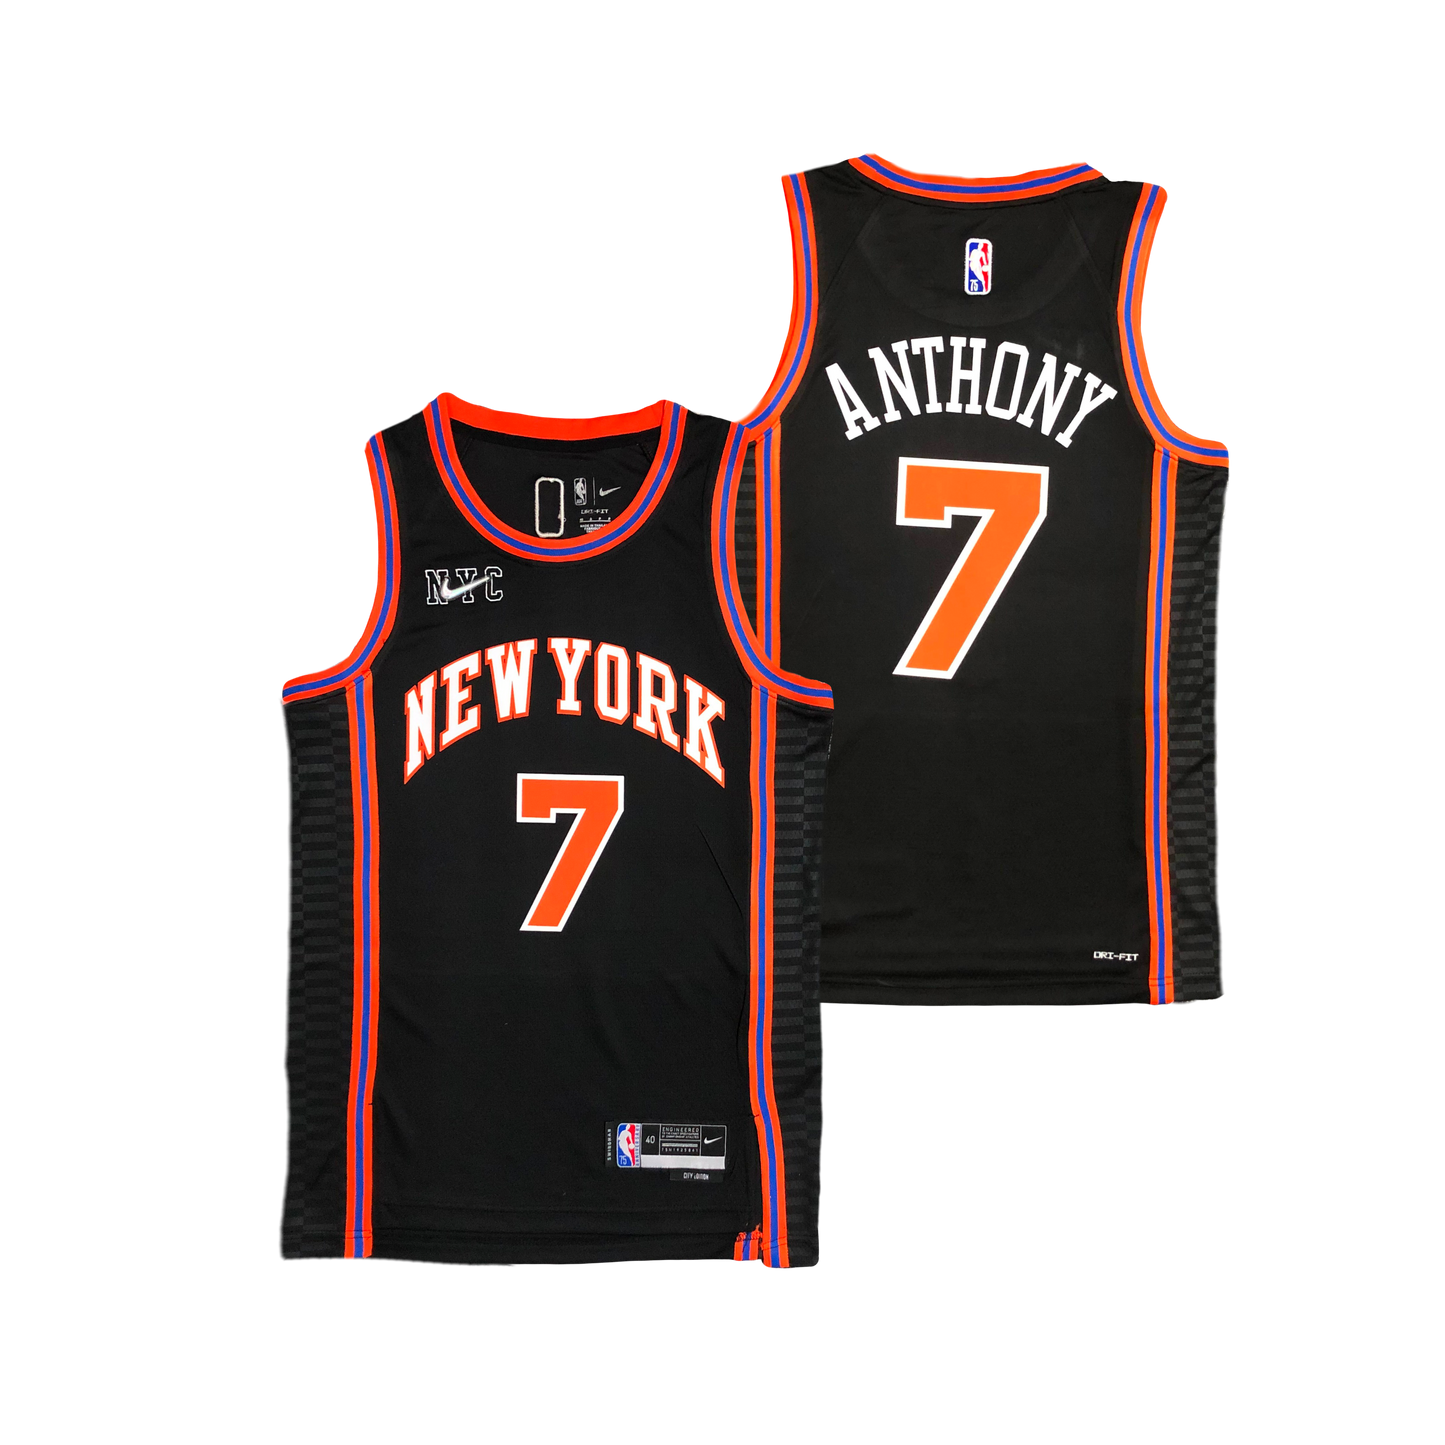 Carmelo Anthony New York Knicks 2021/22 Nike City Edition NBA Swingman Jersey - Black